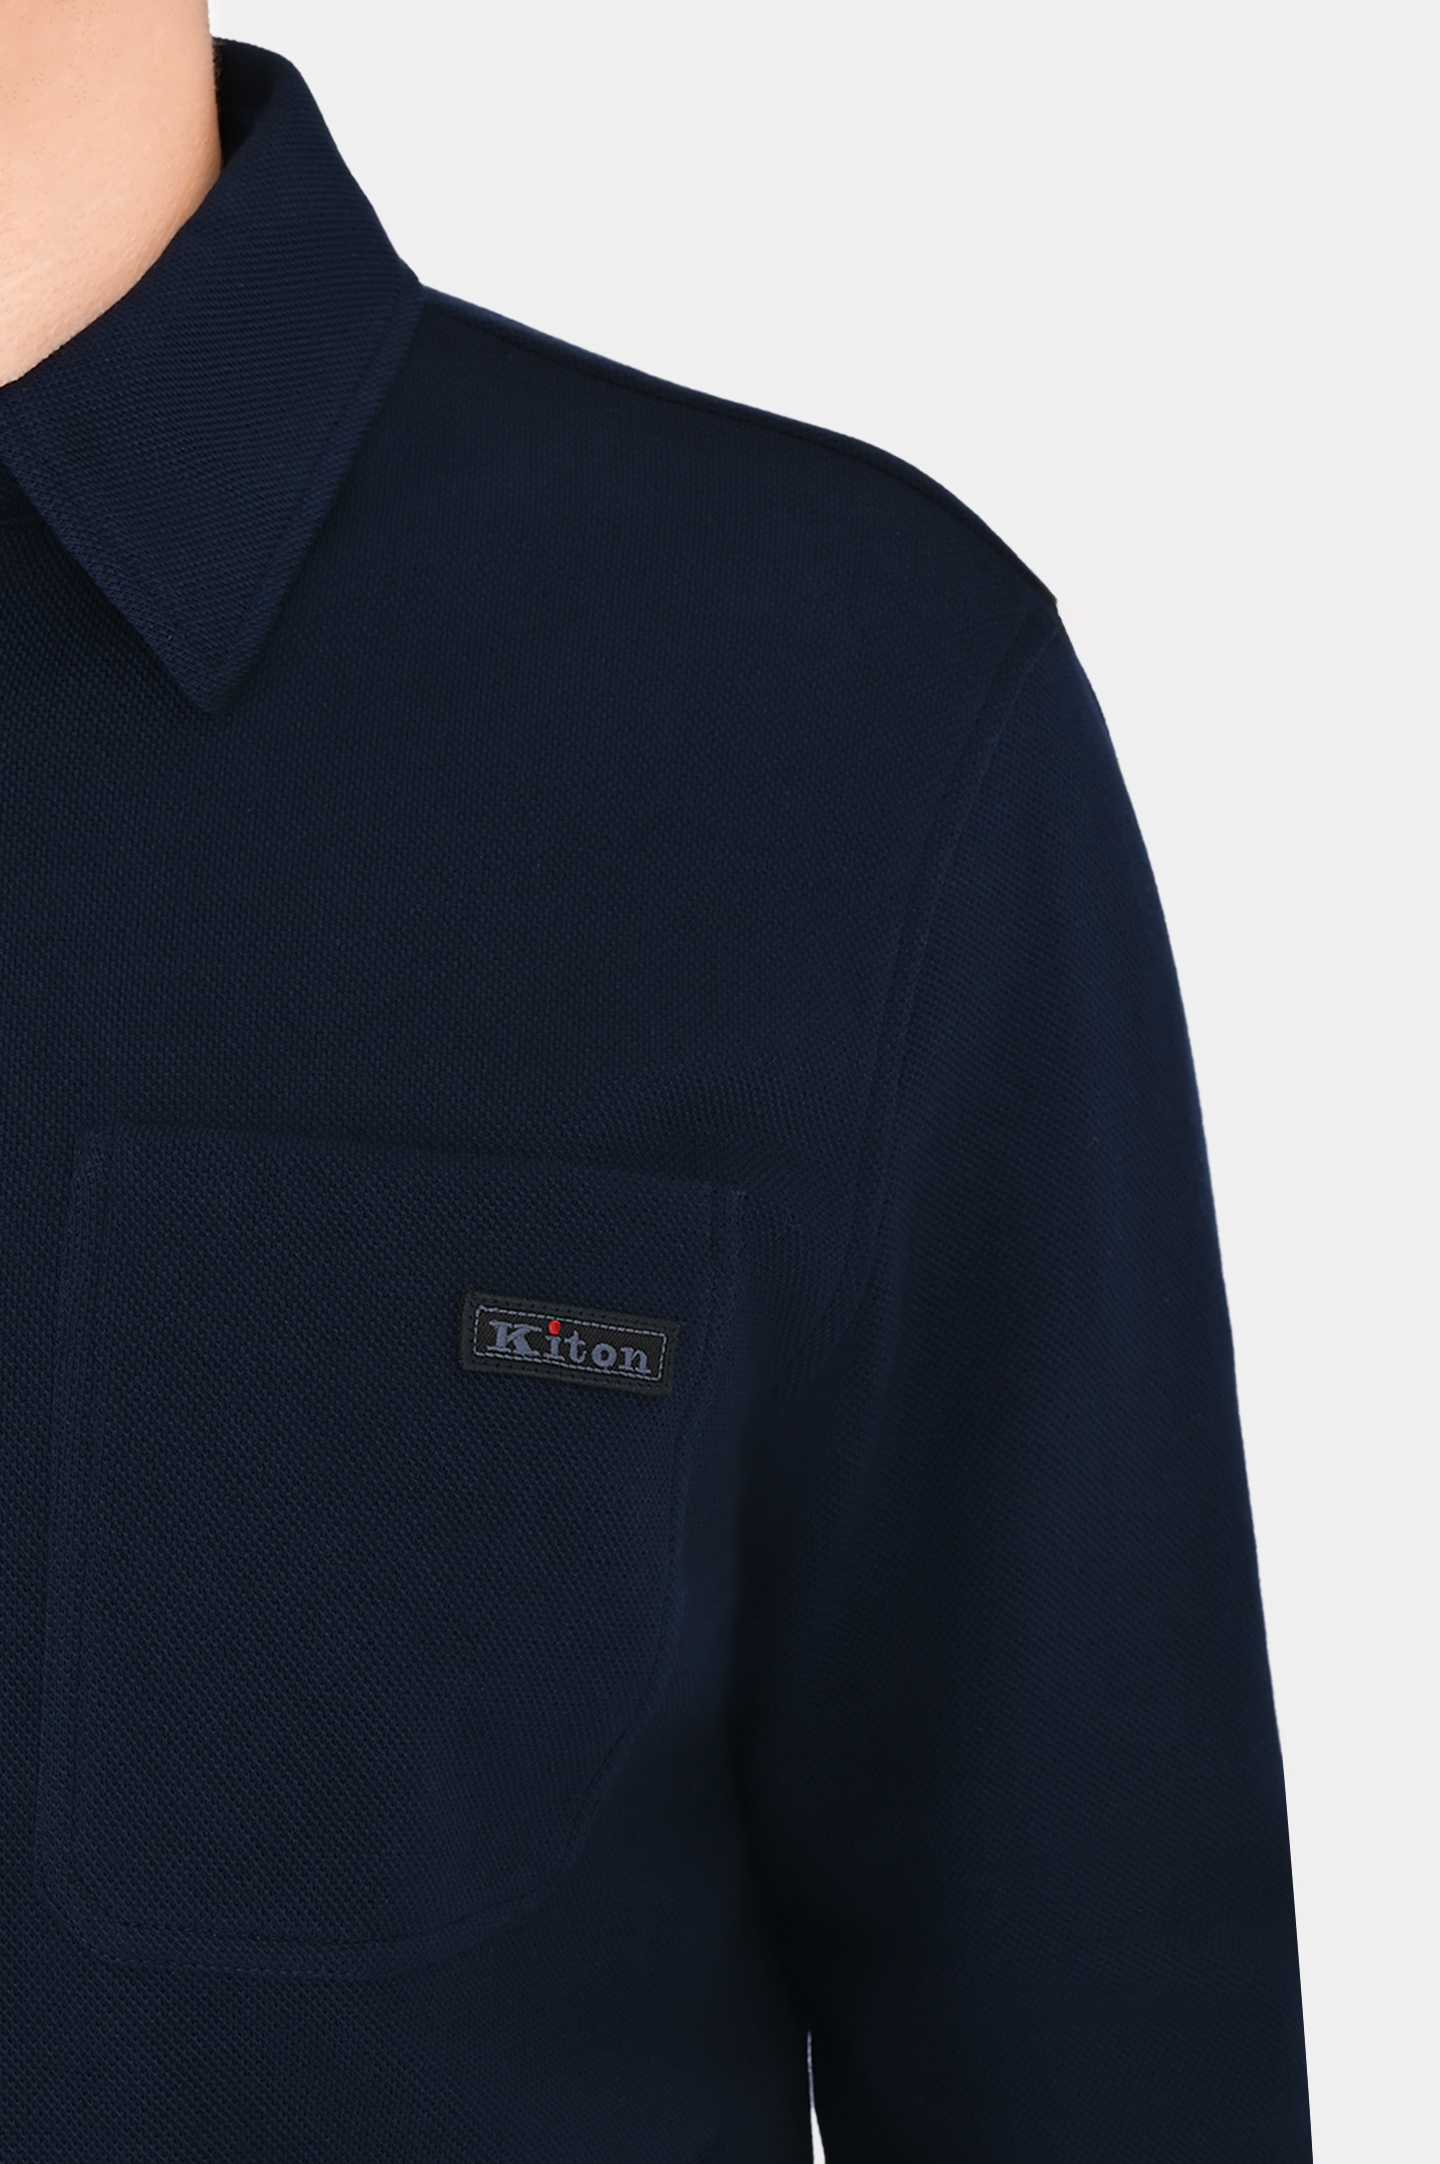 Куртка на кнопках с карманами KITON UW1828V0851C0, цвет: Темно-синий, Мужской